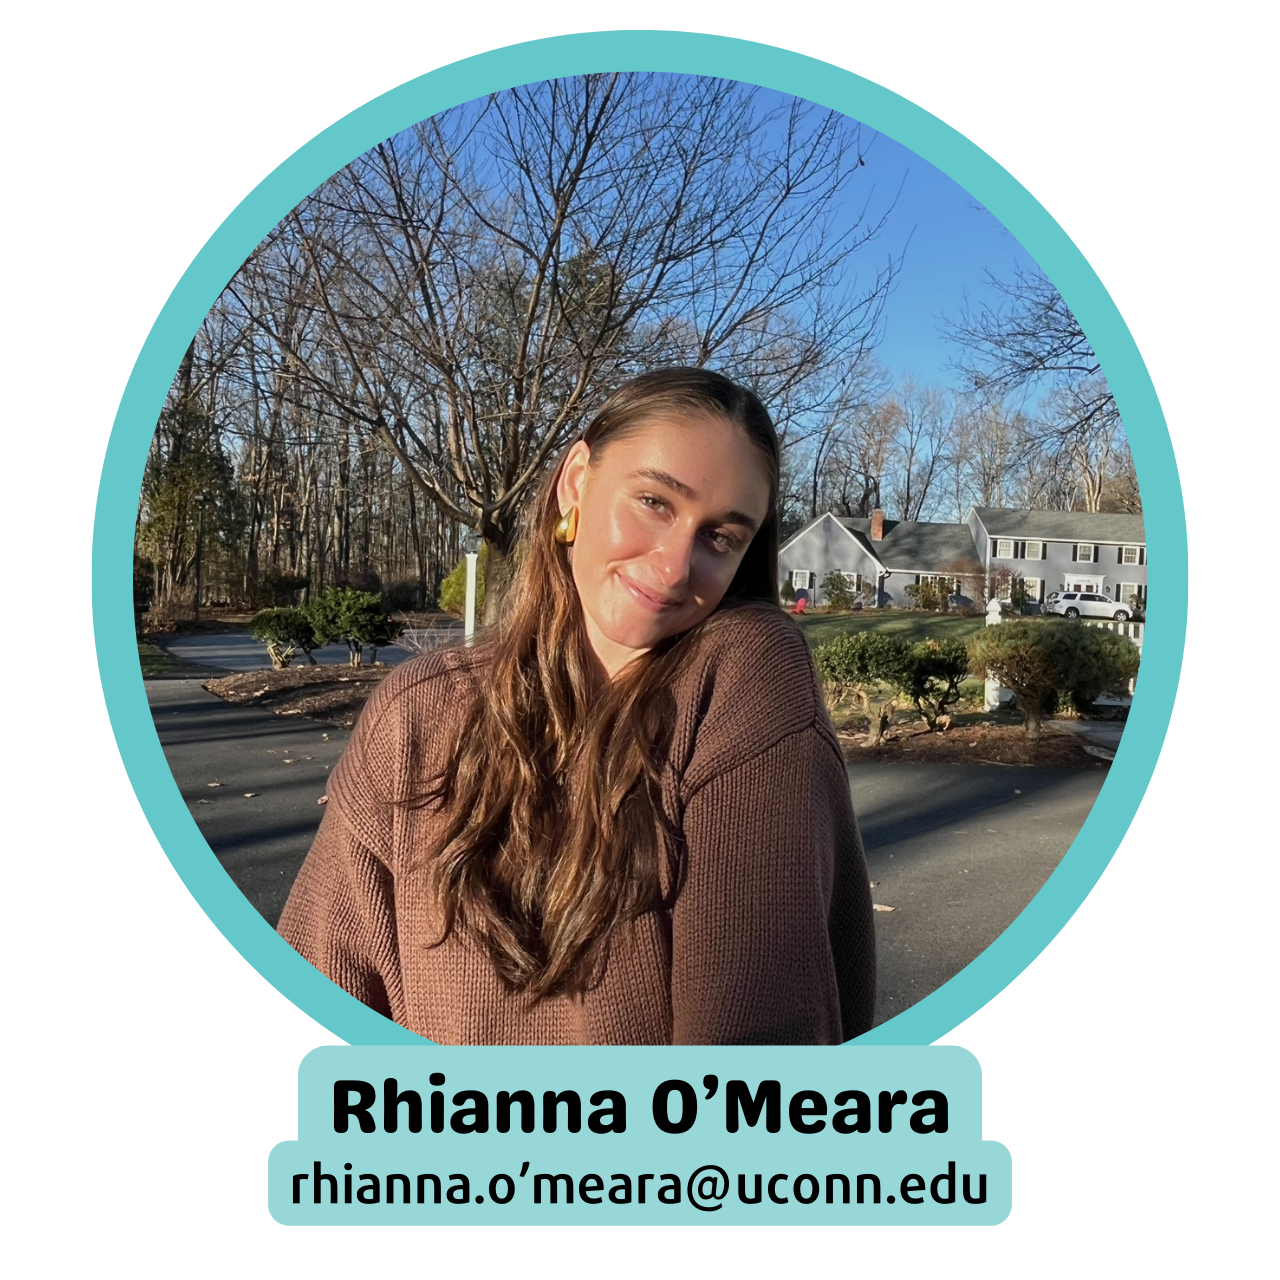 Rhinanna O'Meara